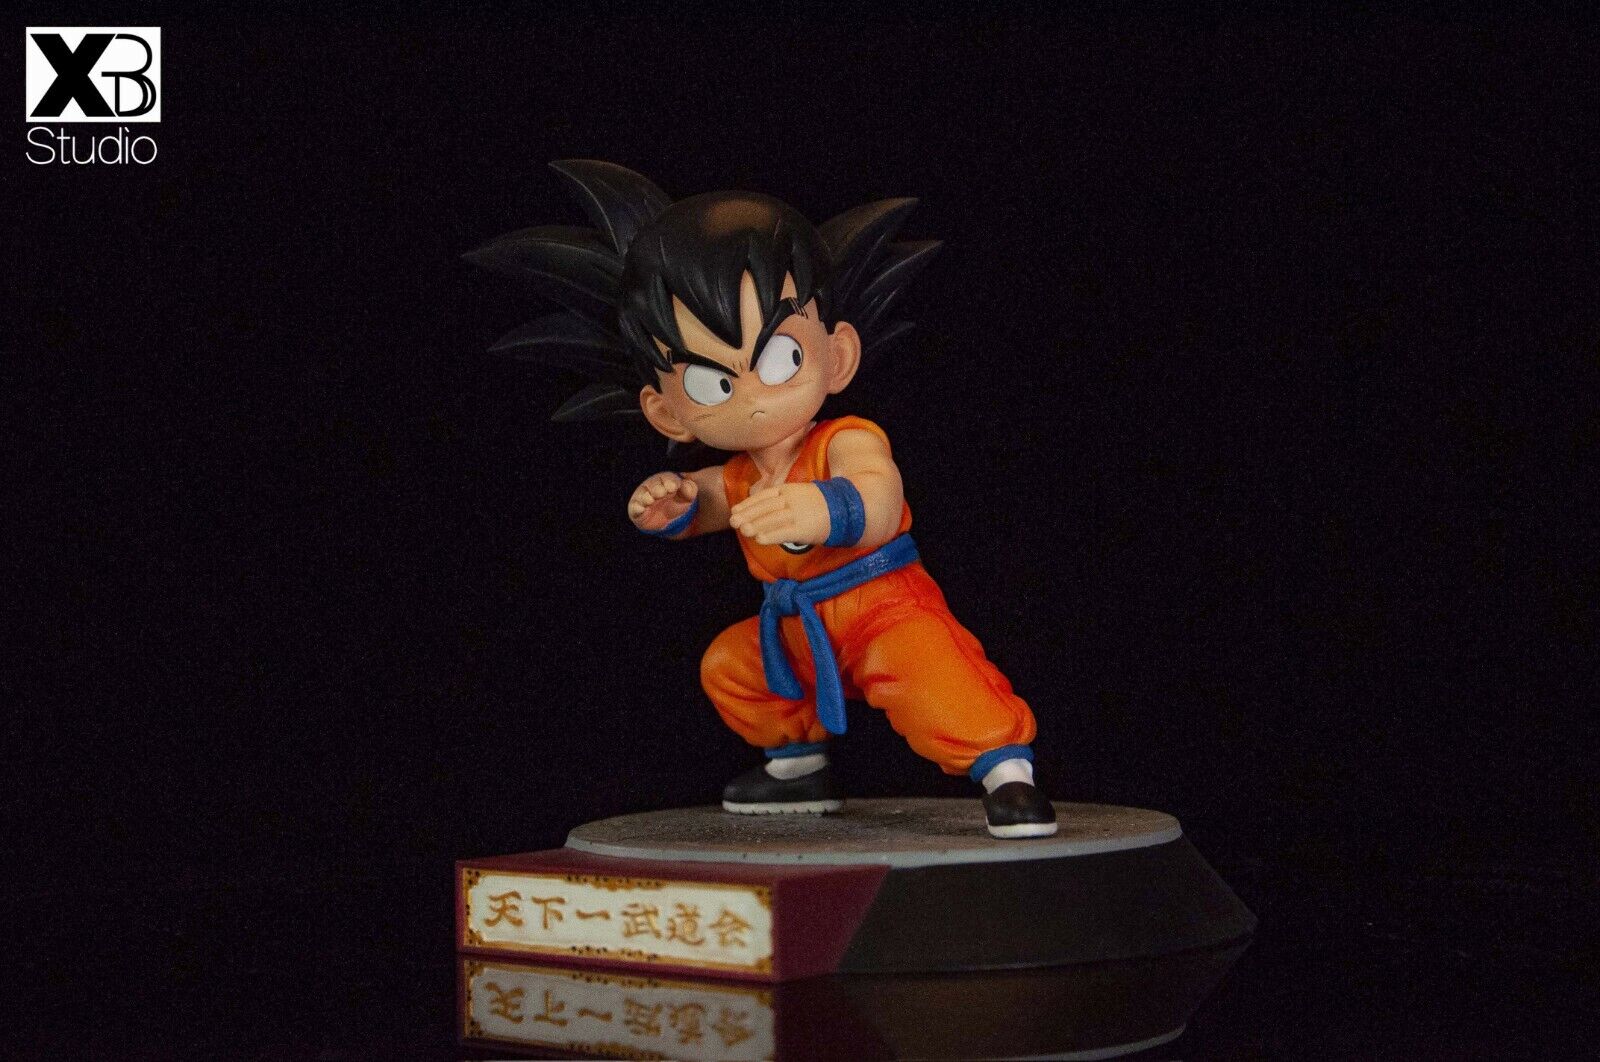 XBD Studio Dragon Ball Z Budokai Child Goku Statue 13.5cm High Model INSTOCK 